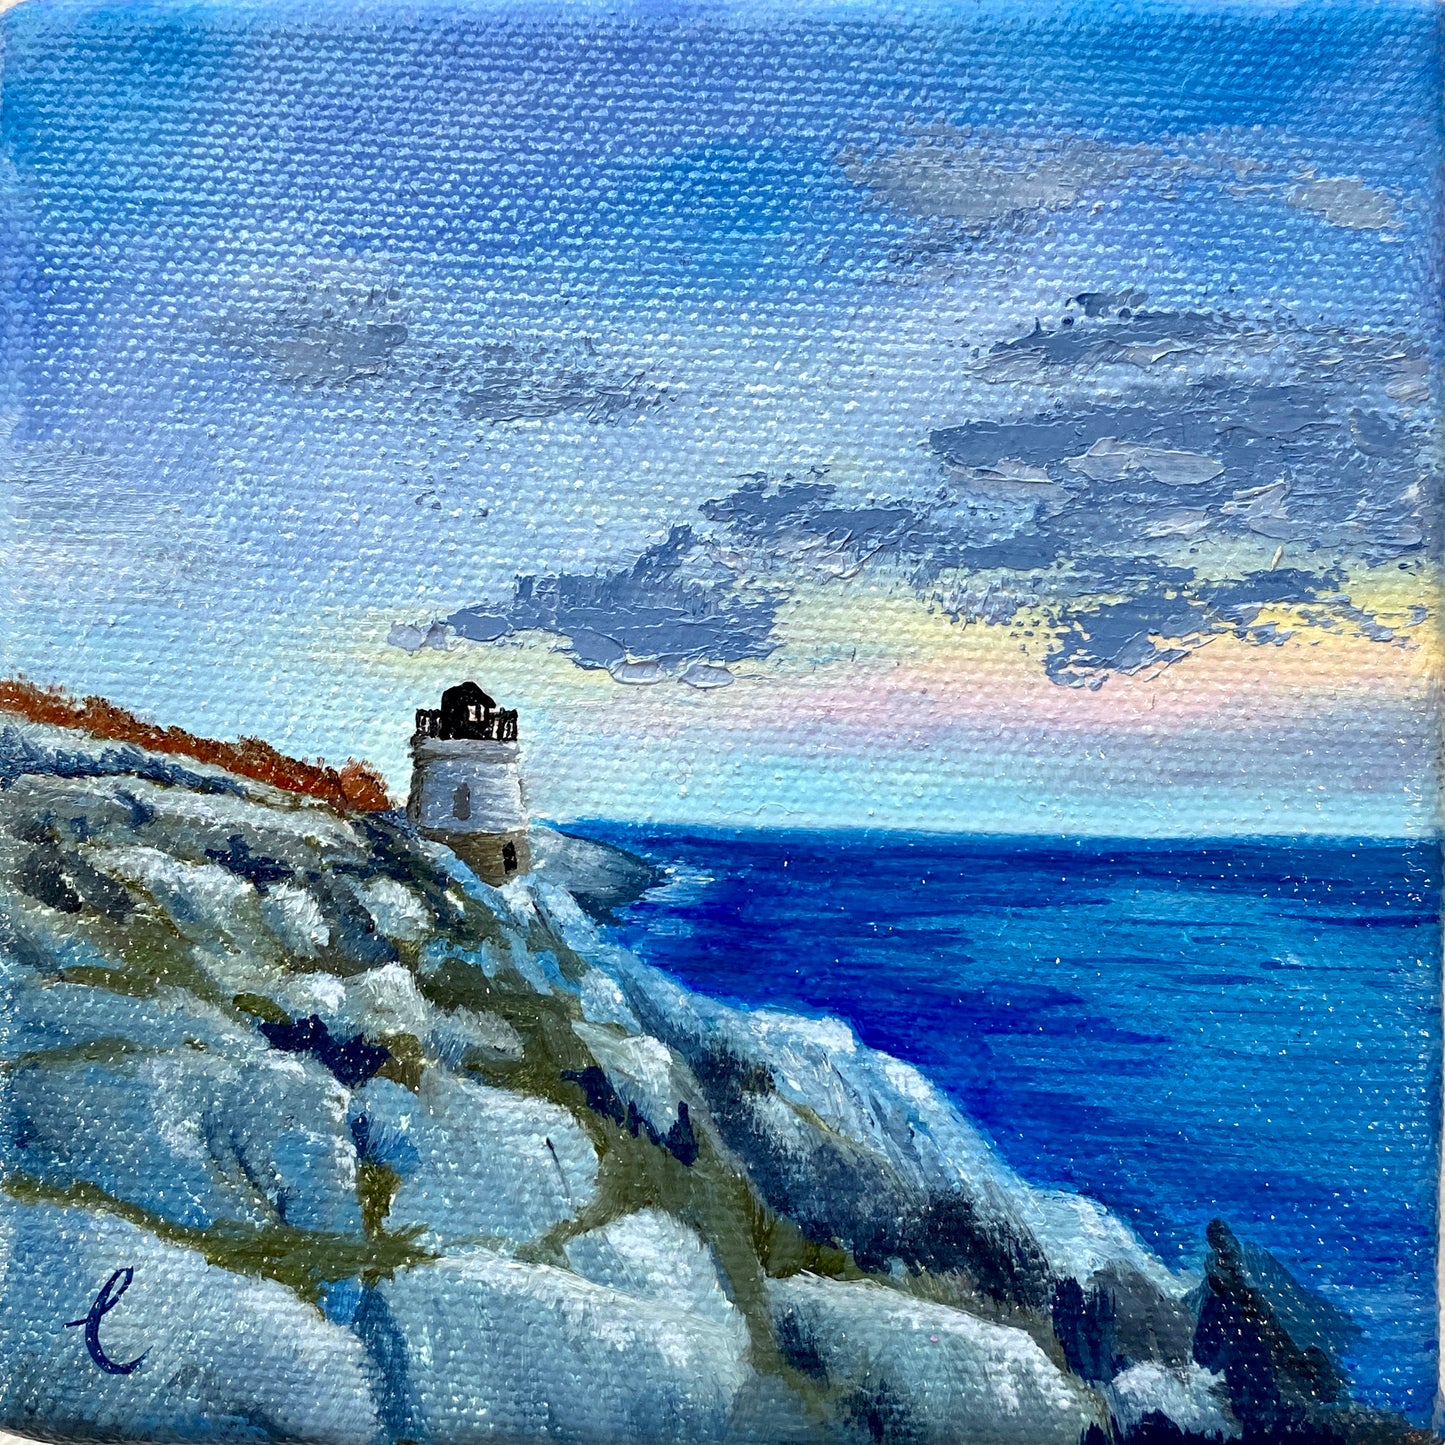 Mini Castle Hill Lighthouse in Newport, RI